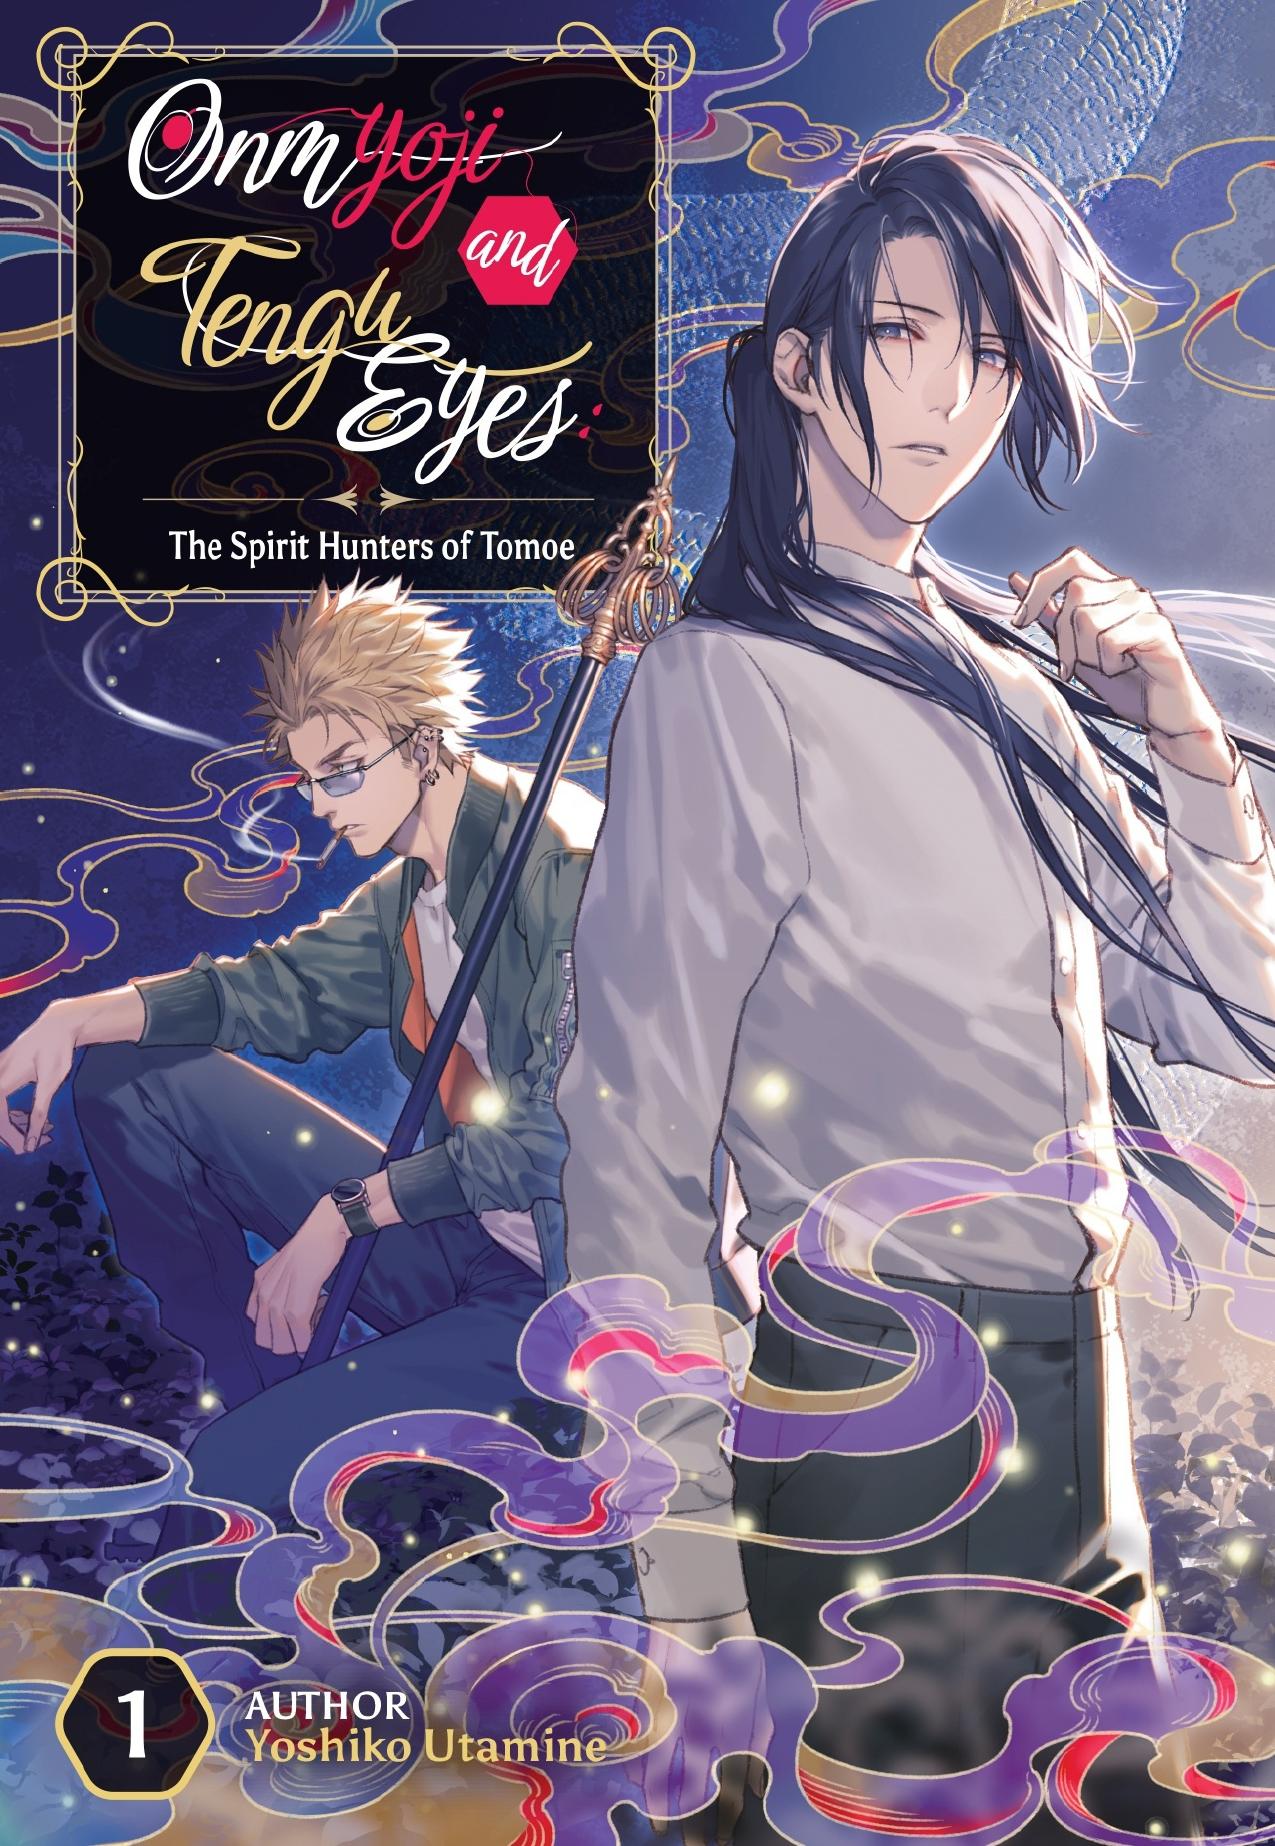 Onmyoji and Tengu Eyes, Vol 1: The Spirit Hunters of Tomoe by Yoshiko Utamine